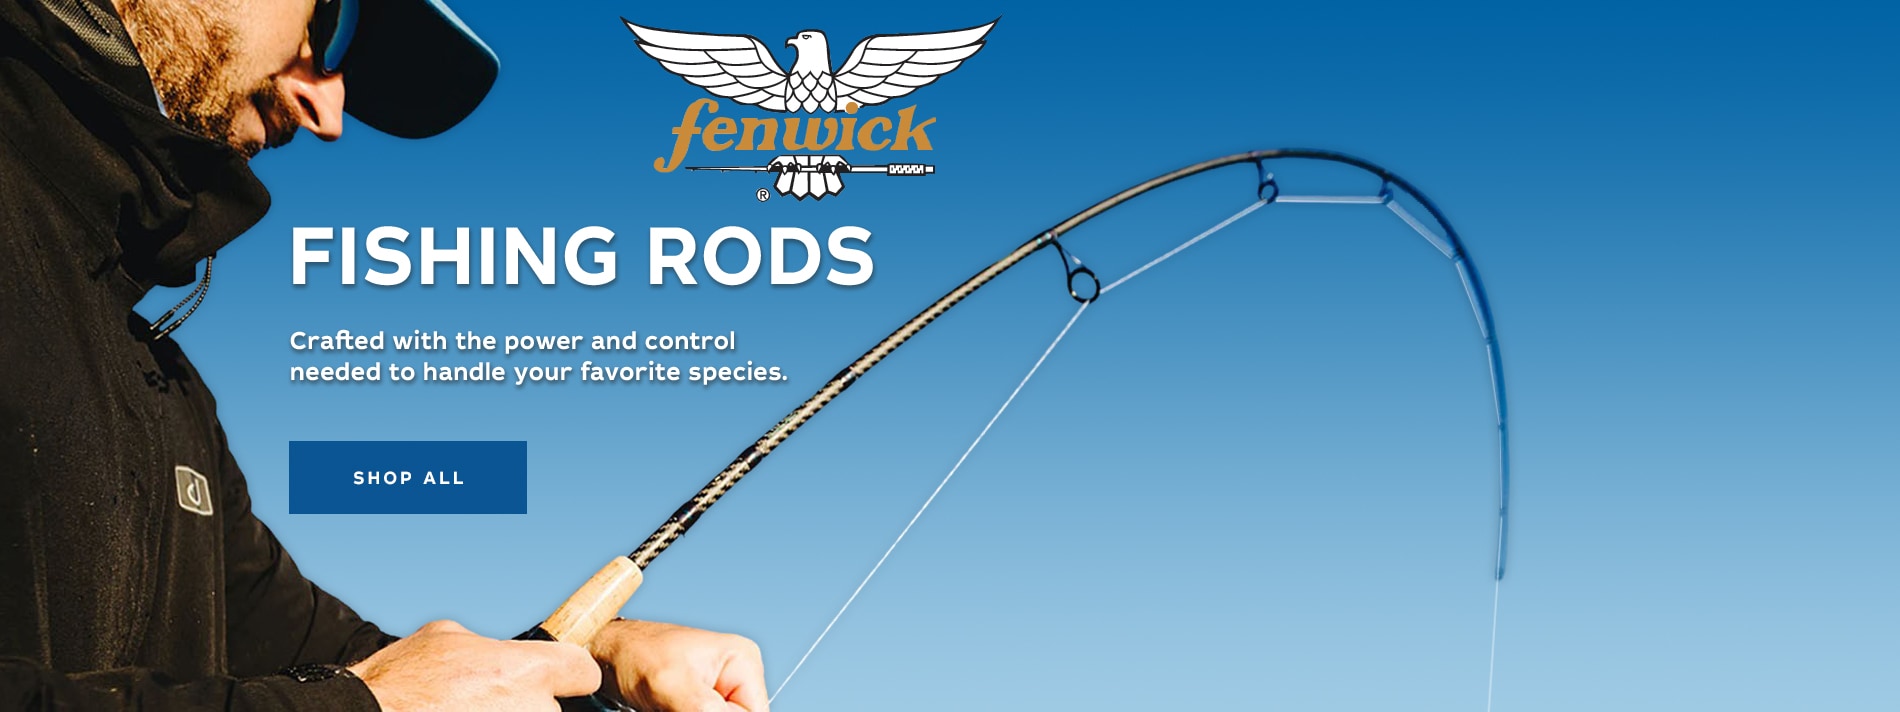 Fenwick: Fishing Rods, Fly Fishing